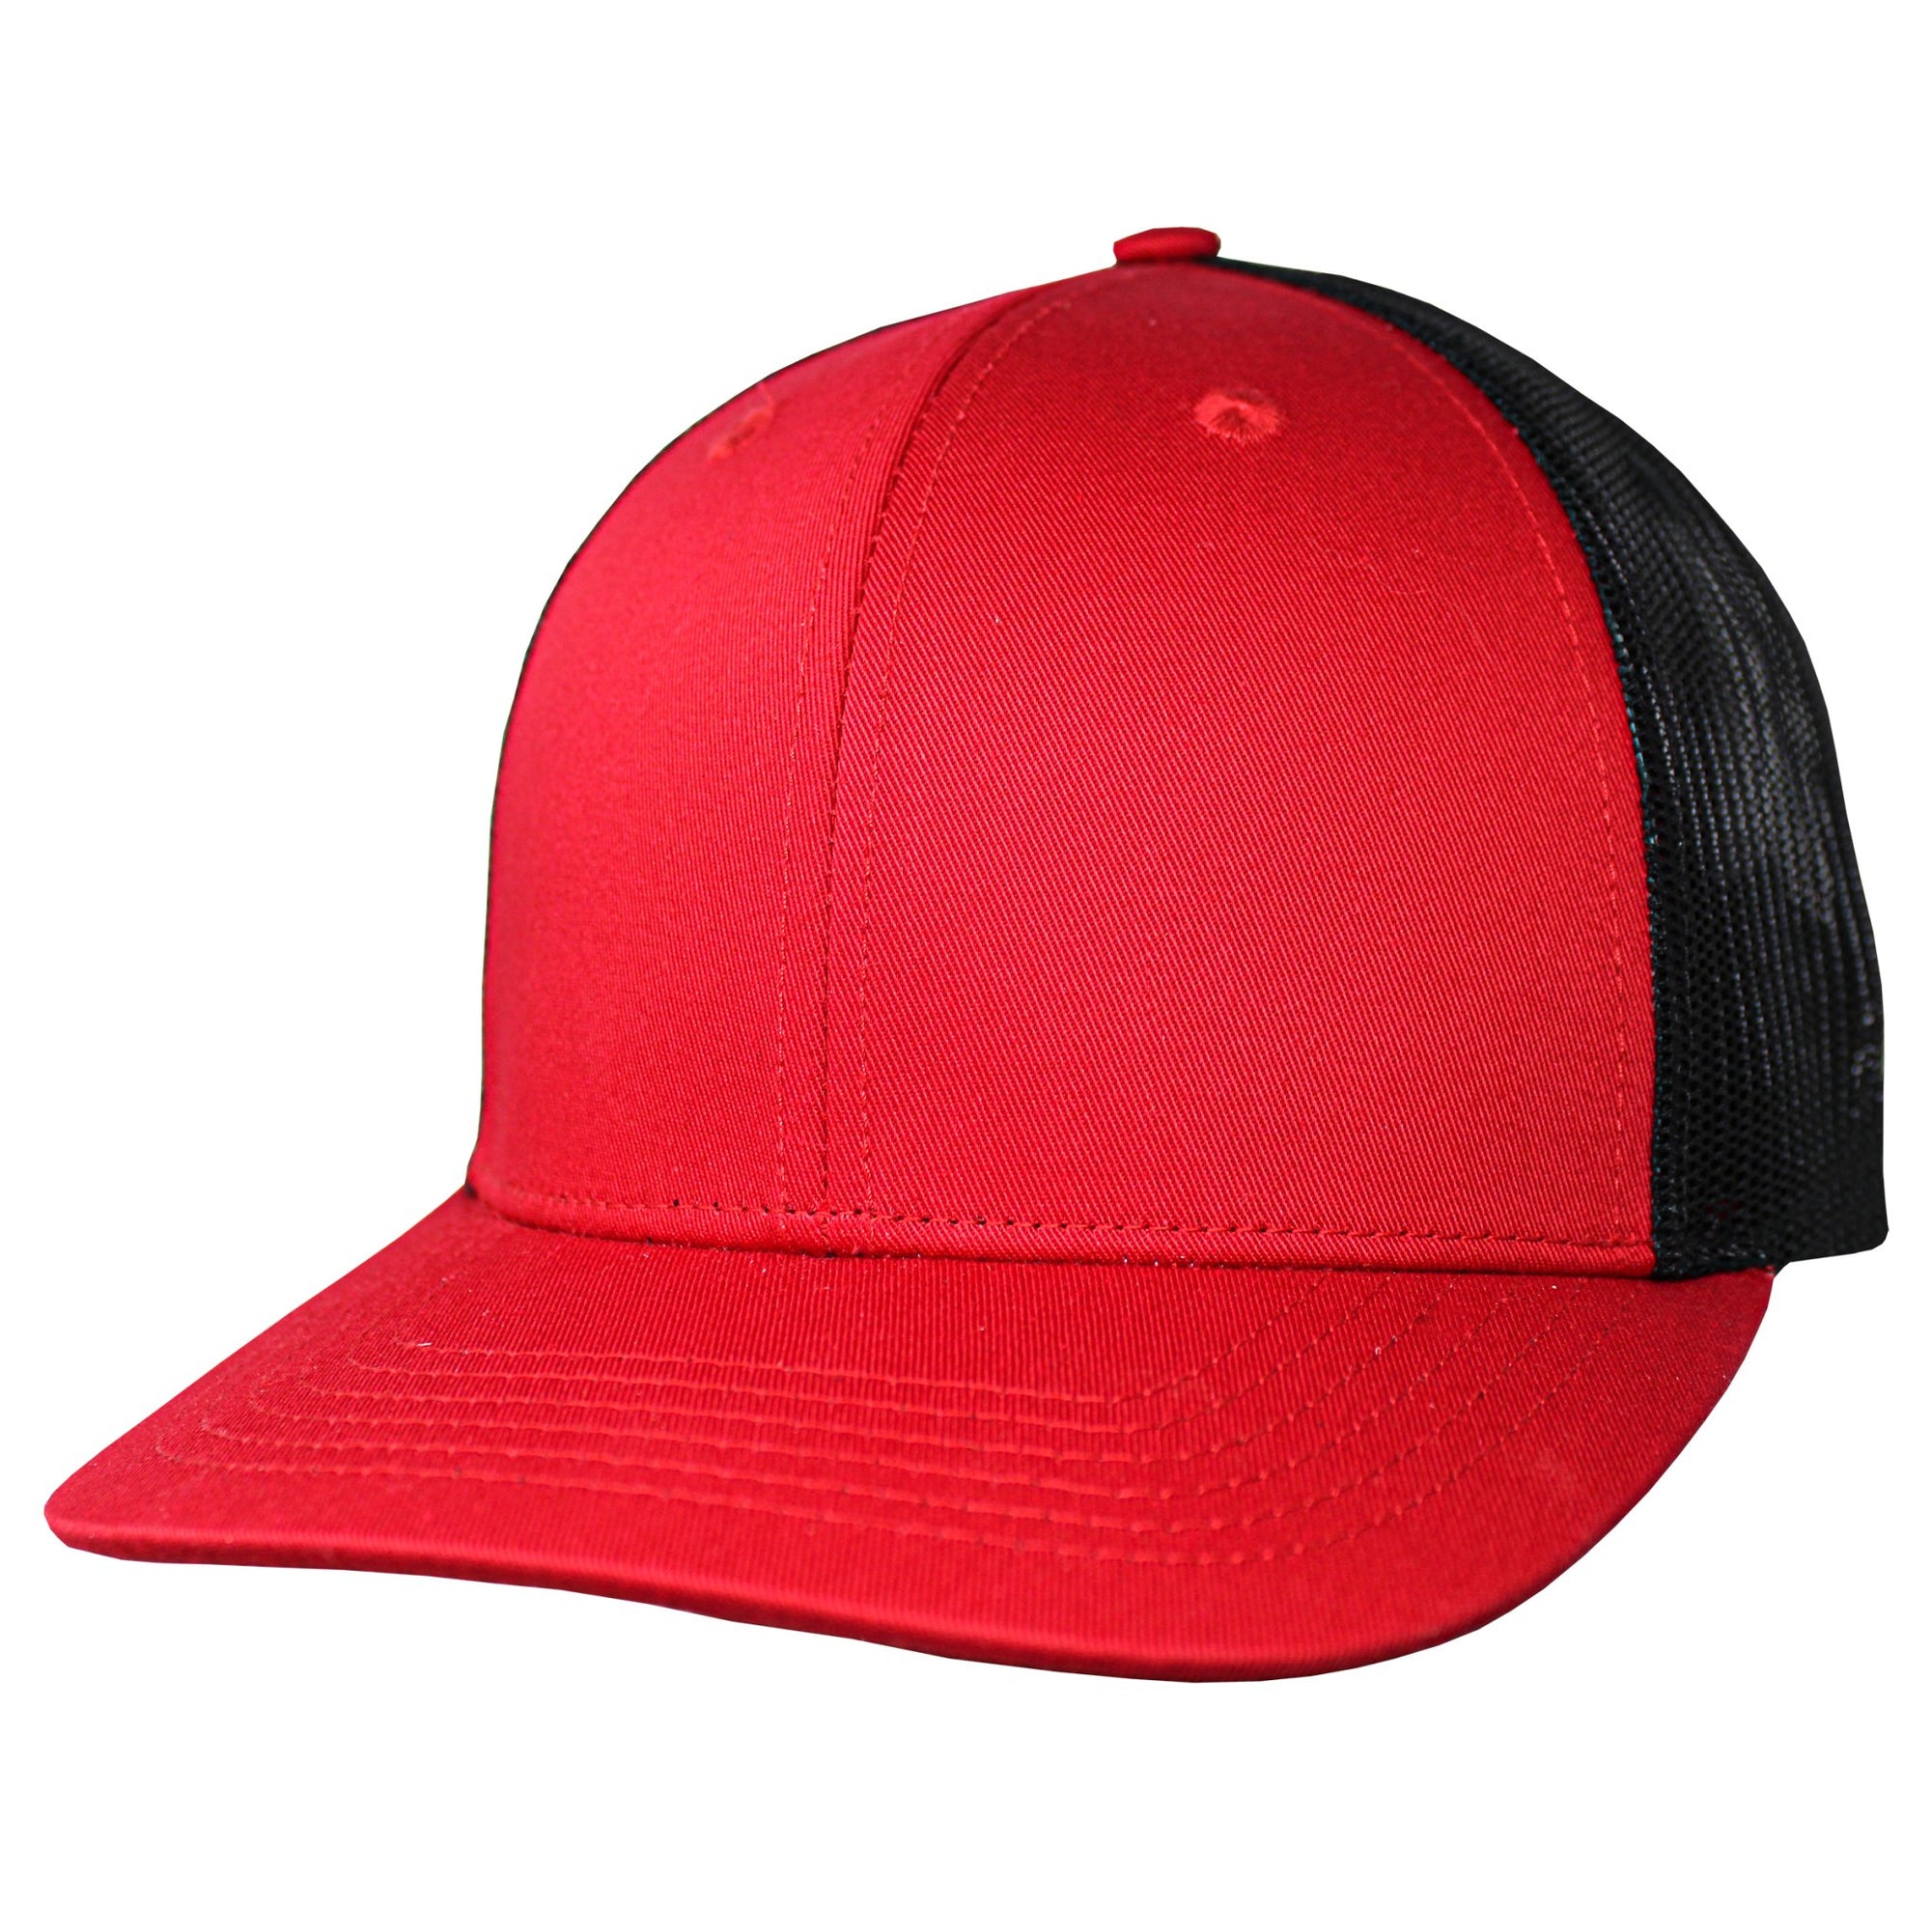 Blank Headwear - BC23 / 6 Panel Performance Trucker Cap - Red / Black - Black Cat MFG - Hat